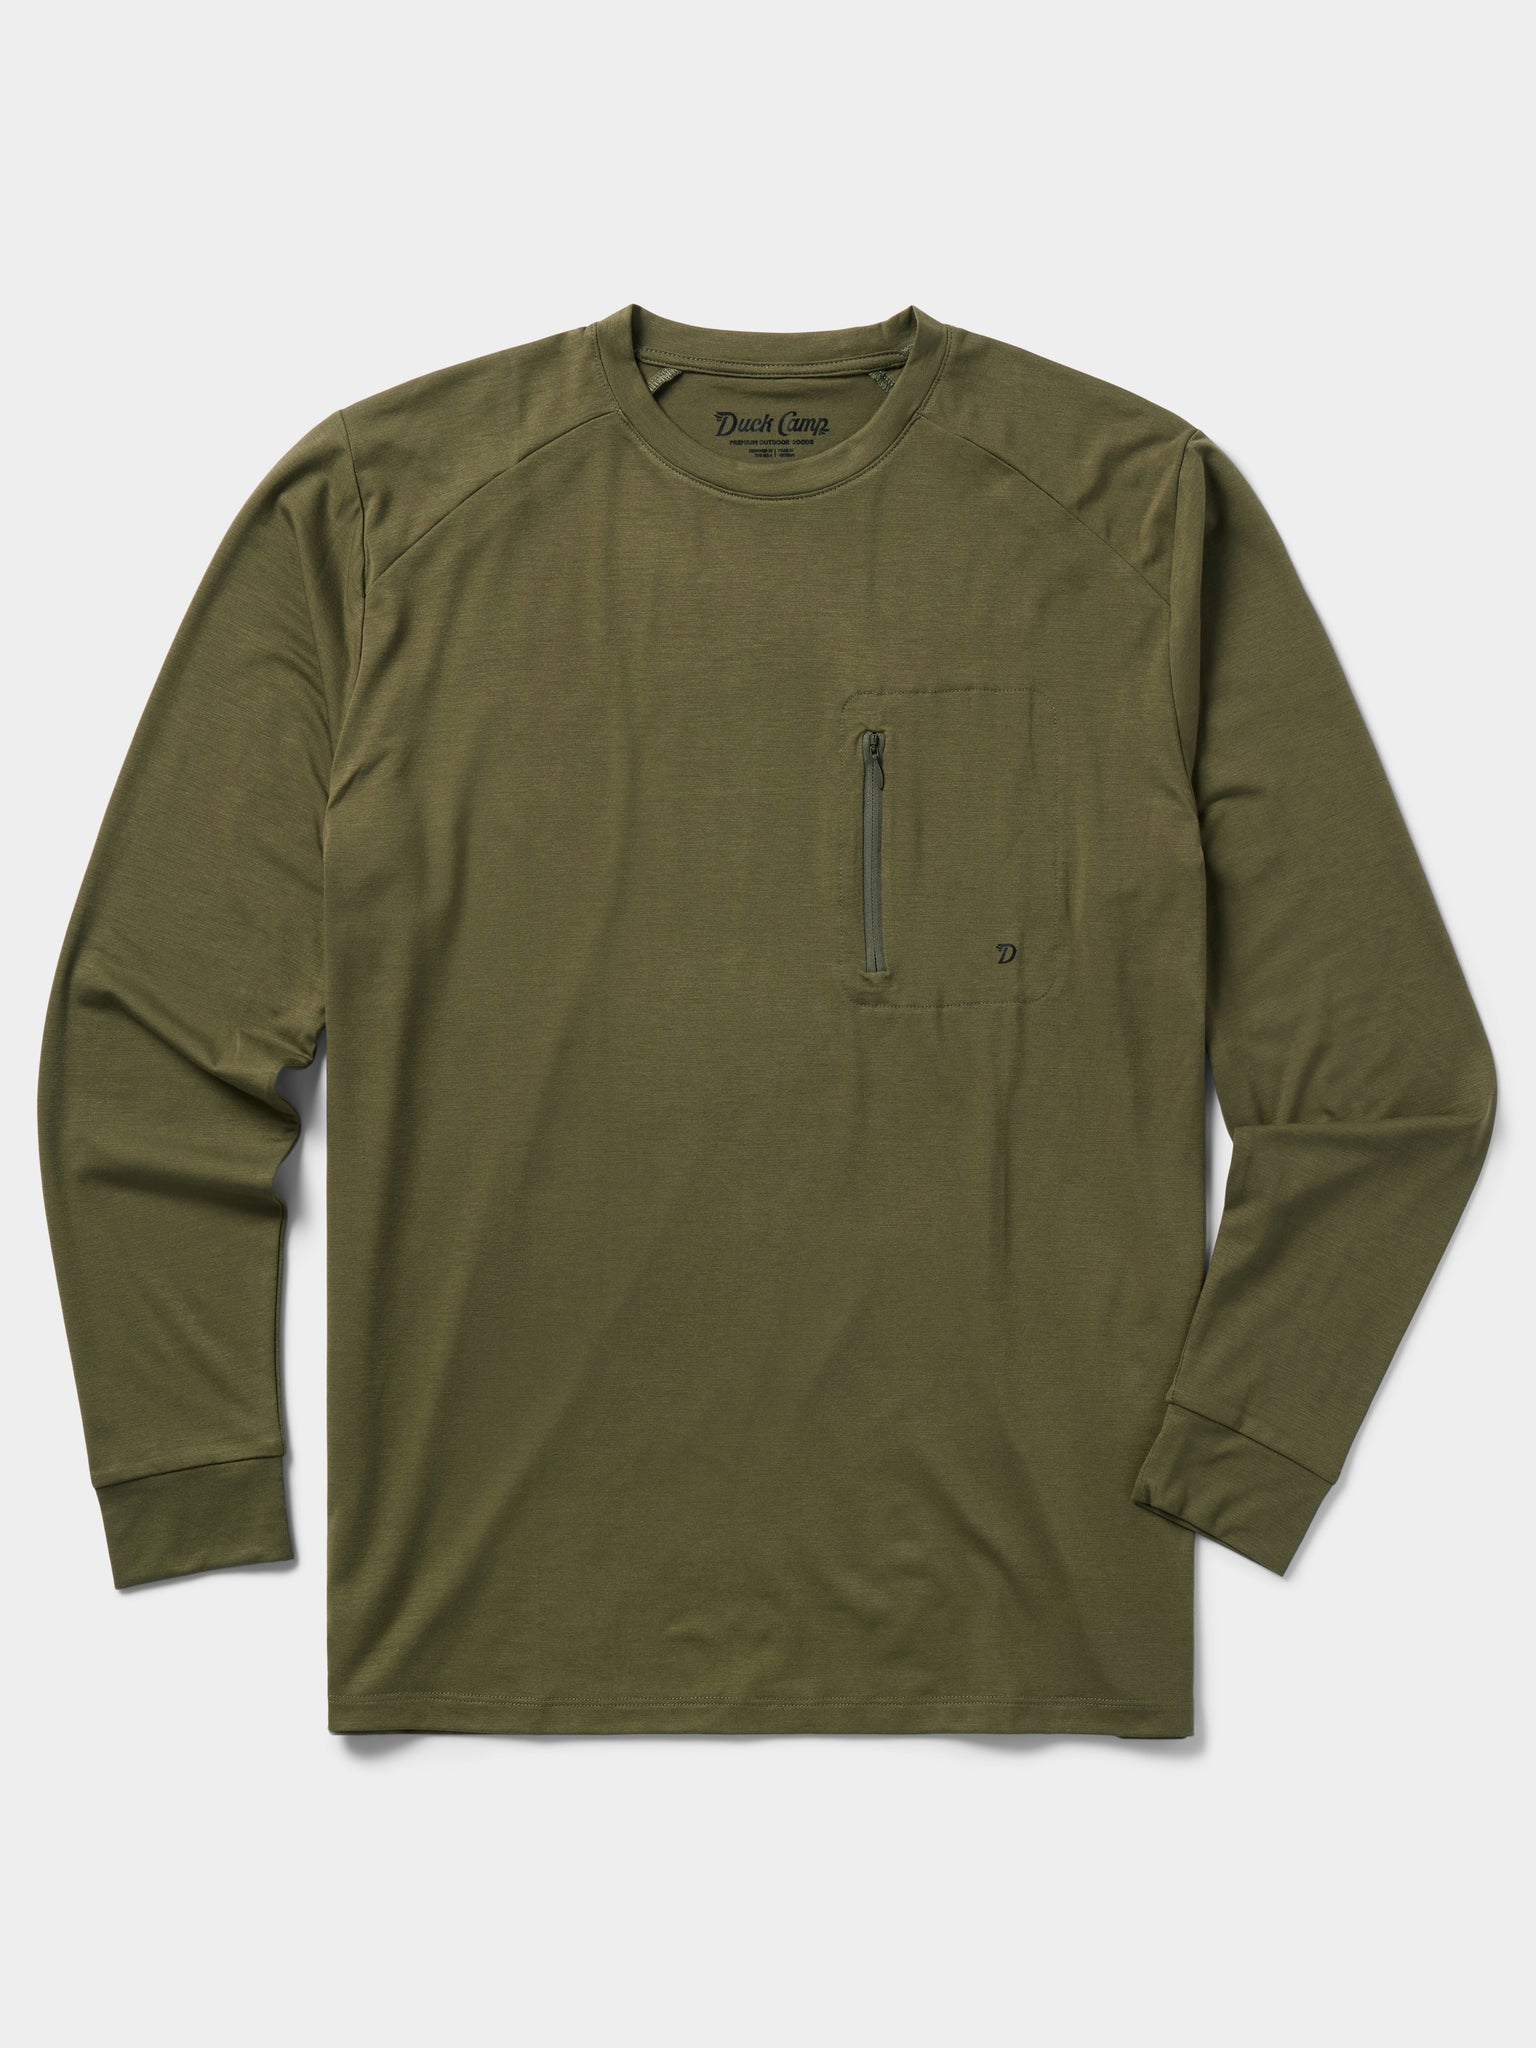 Maxcatch 100% Cotton Fly Fishing T Shirt Men Causal O-neck Basic Outdoor  T-shirt